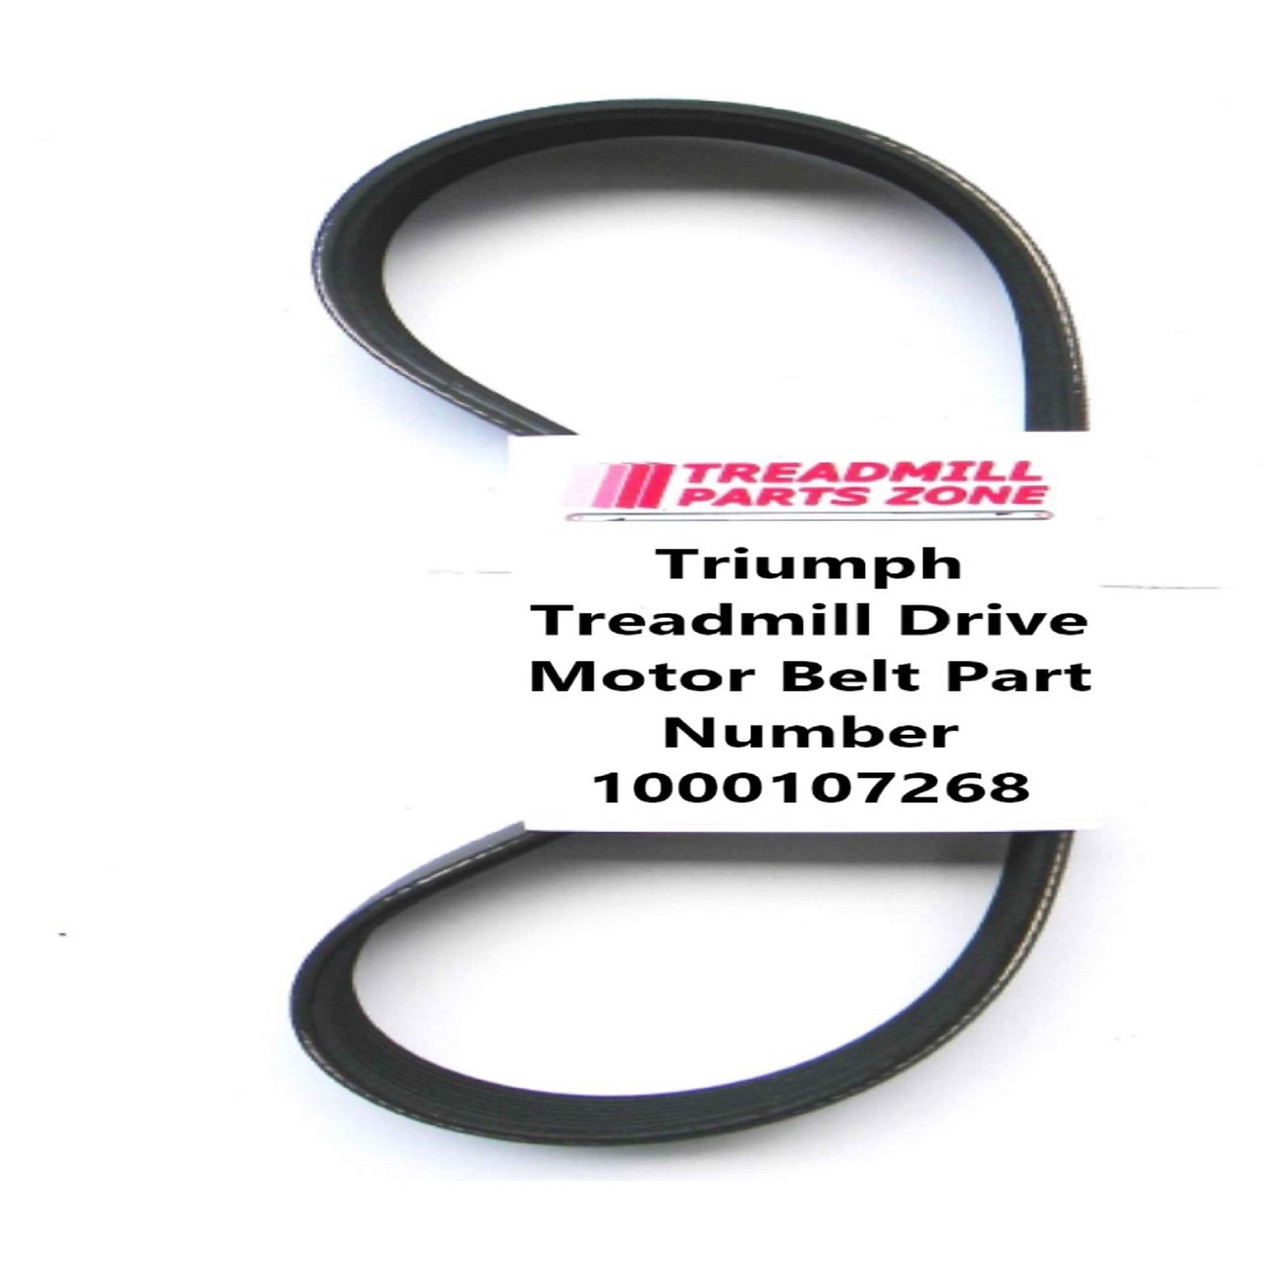 Triumph Treadmill Drive Motor Belt Part Number 1000107268